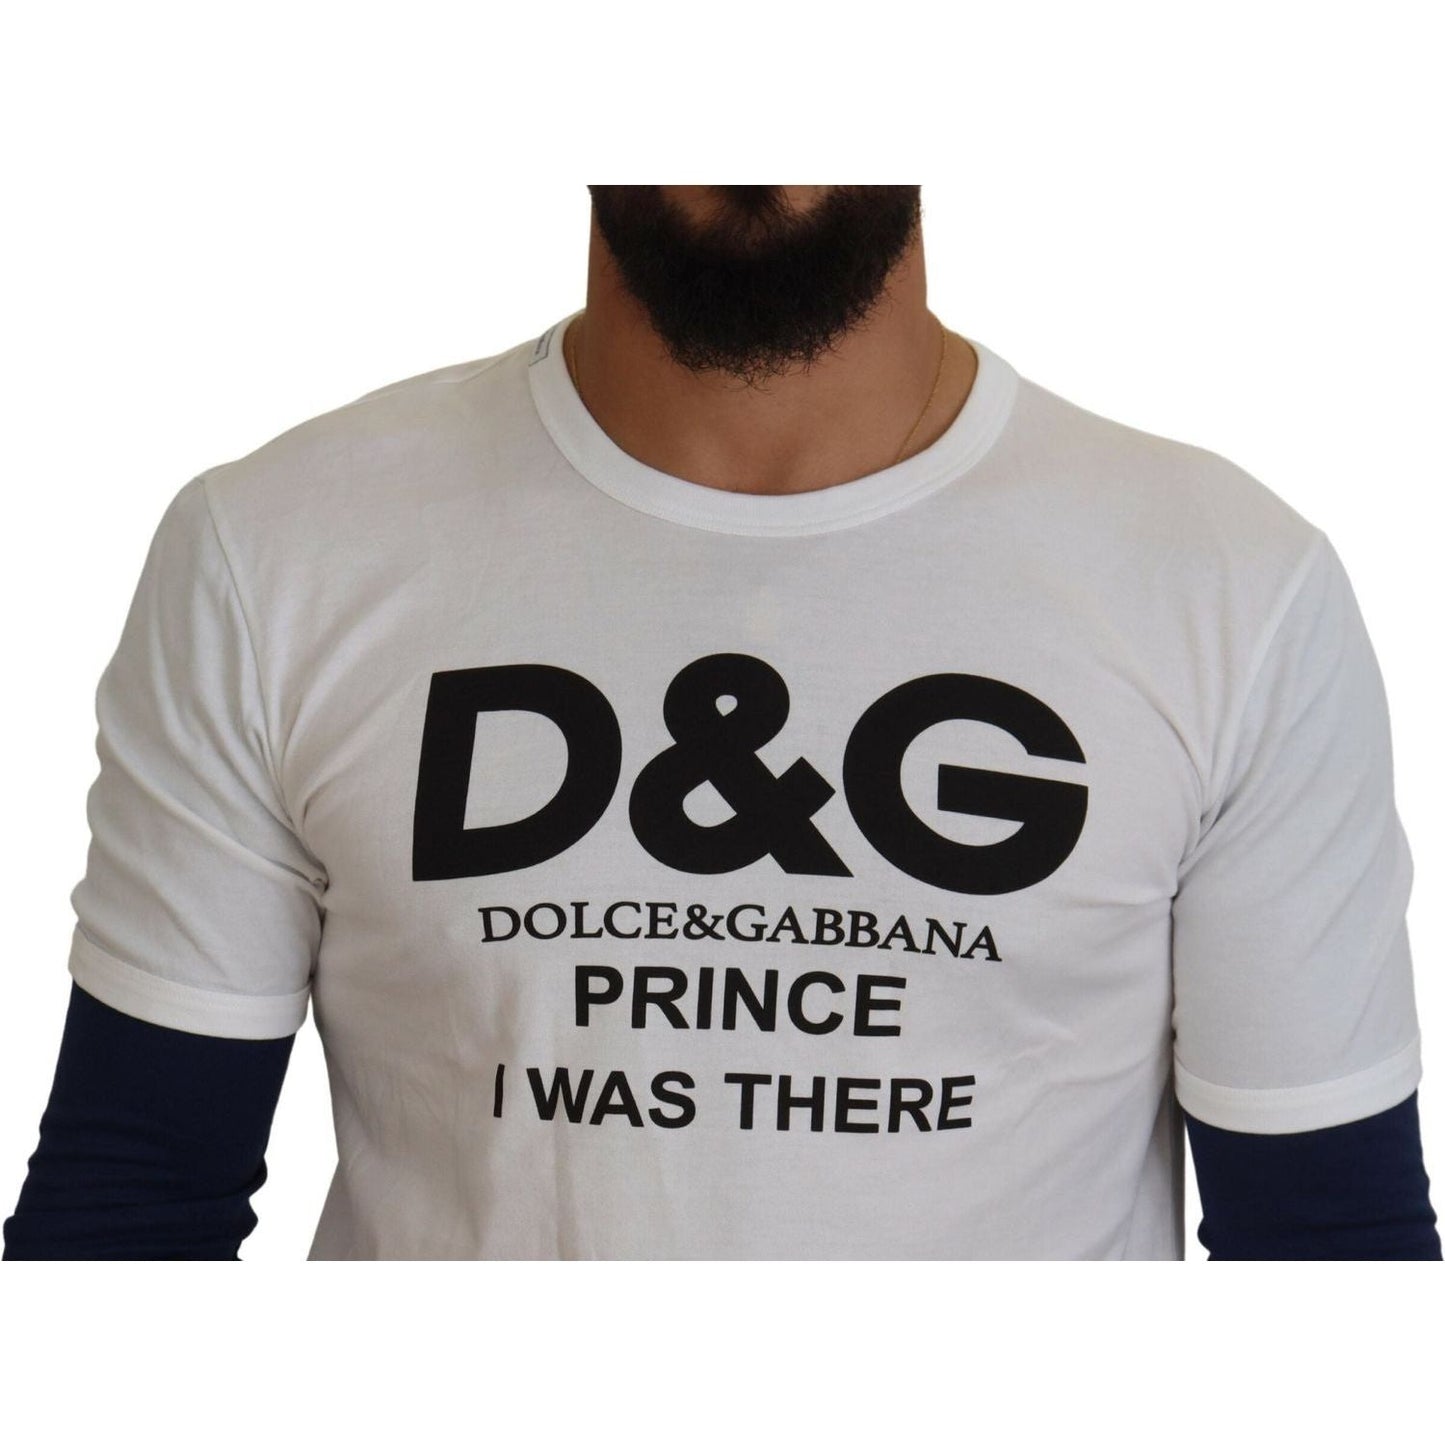 Dolce & Gabbana Elegant White Cotton Pullover Sweater white-dg-prince-crew-neck-pullover-sweater